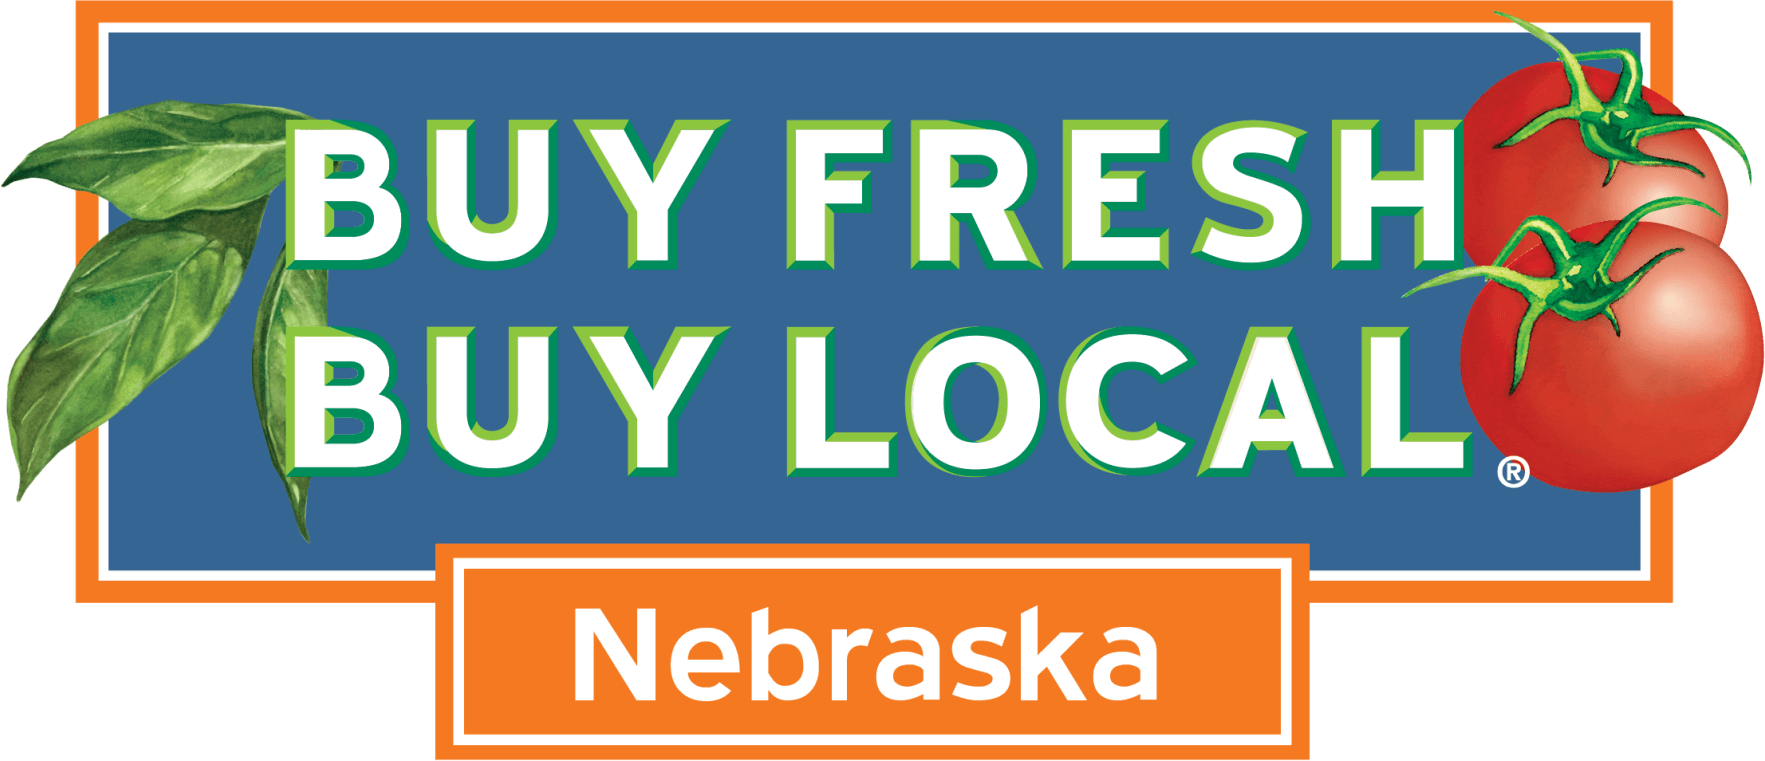 Buy Fresh Buy Local Nebraska